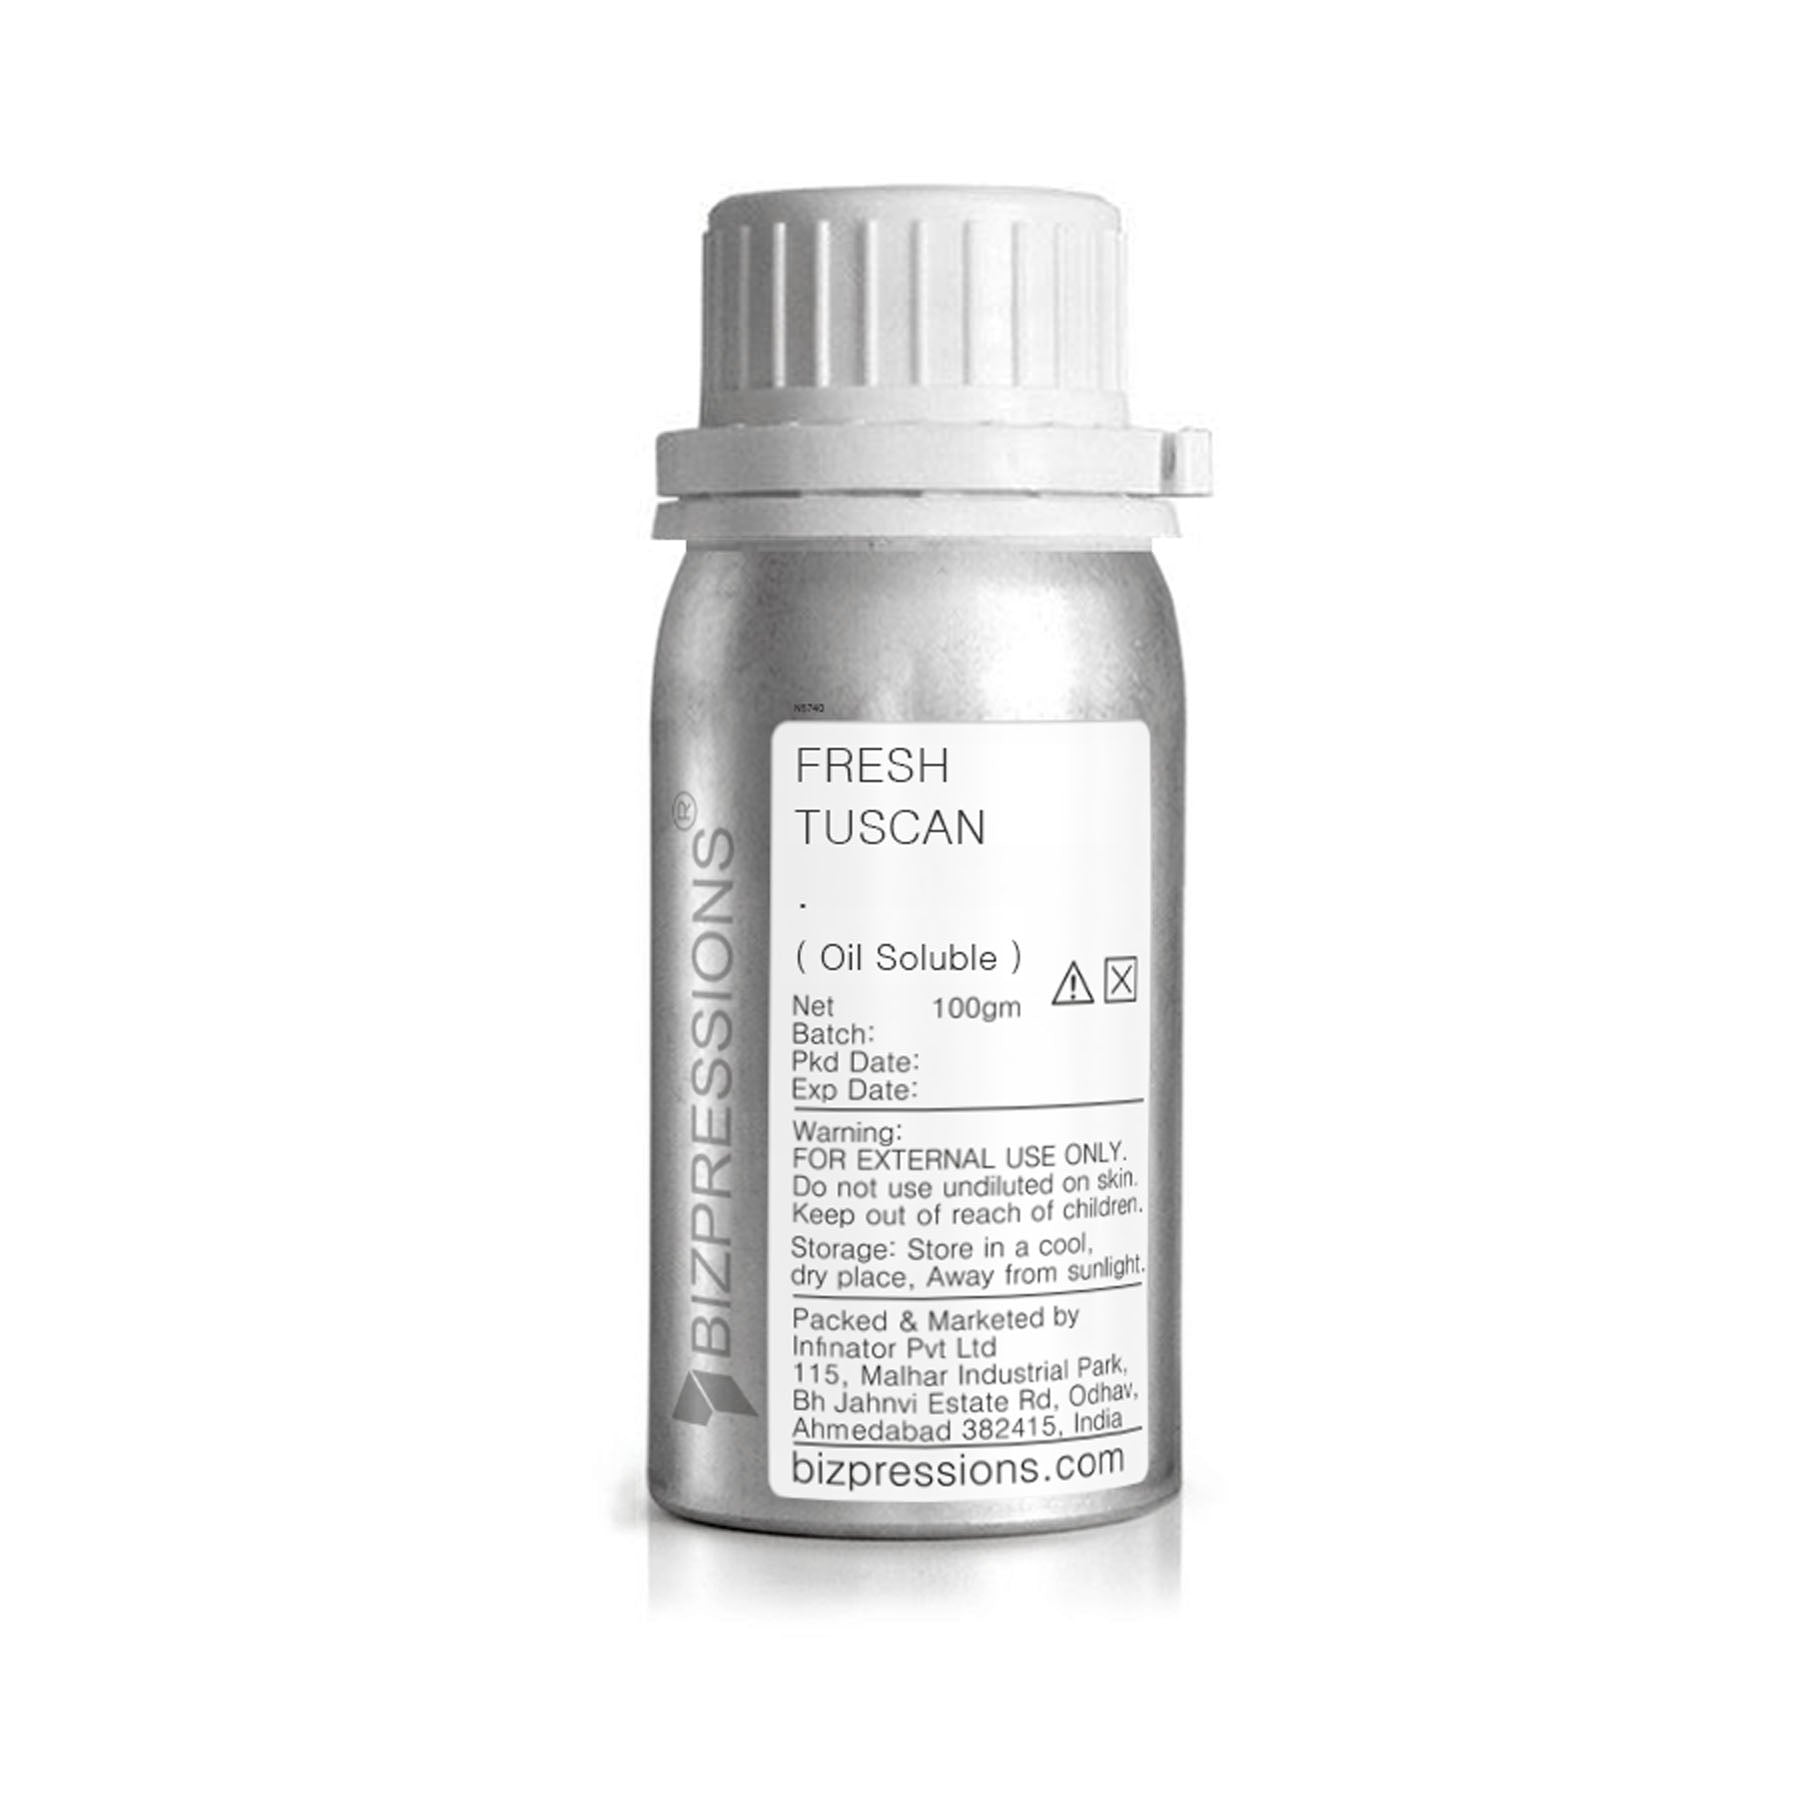 FRESH TUSCAN - Fragrance ( Oil Soluble ) - 100 gm